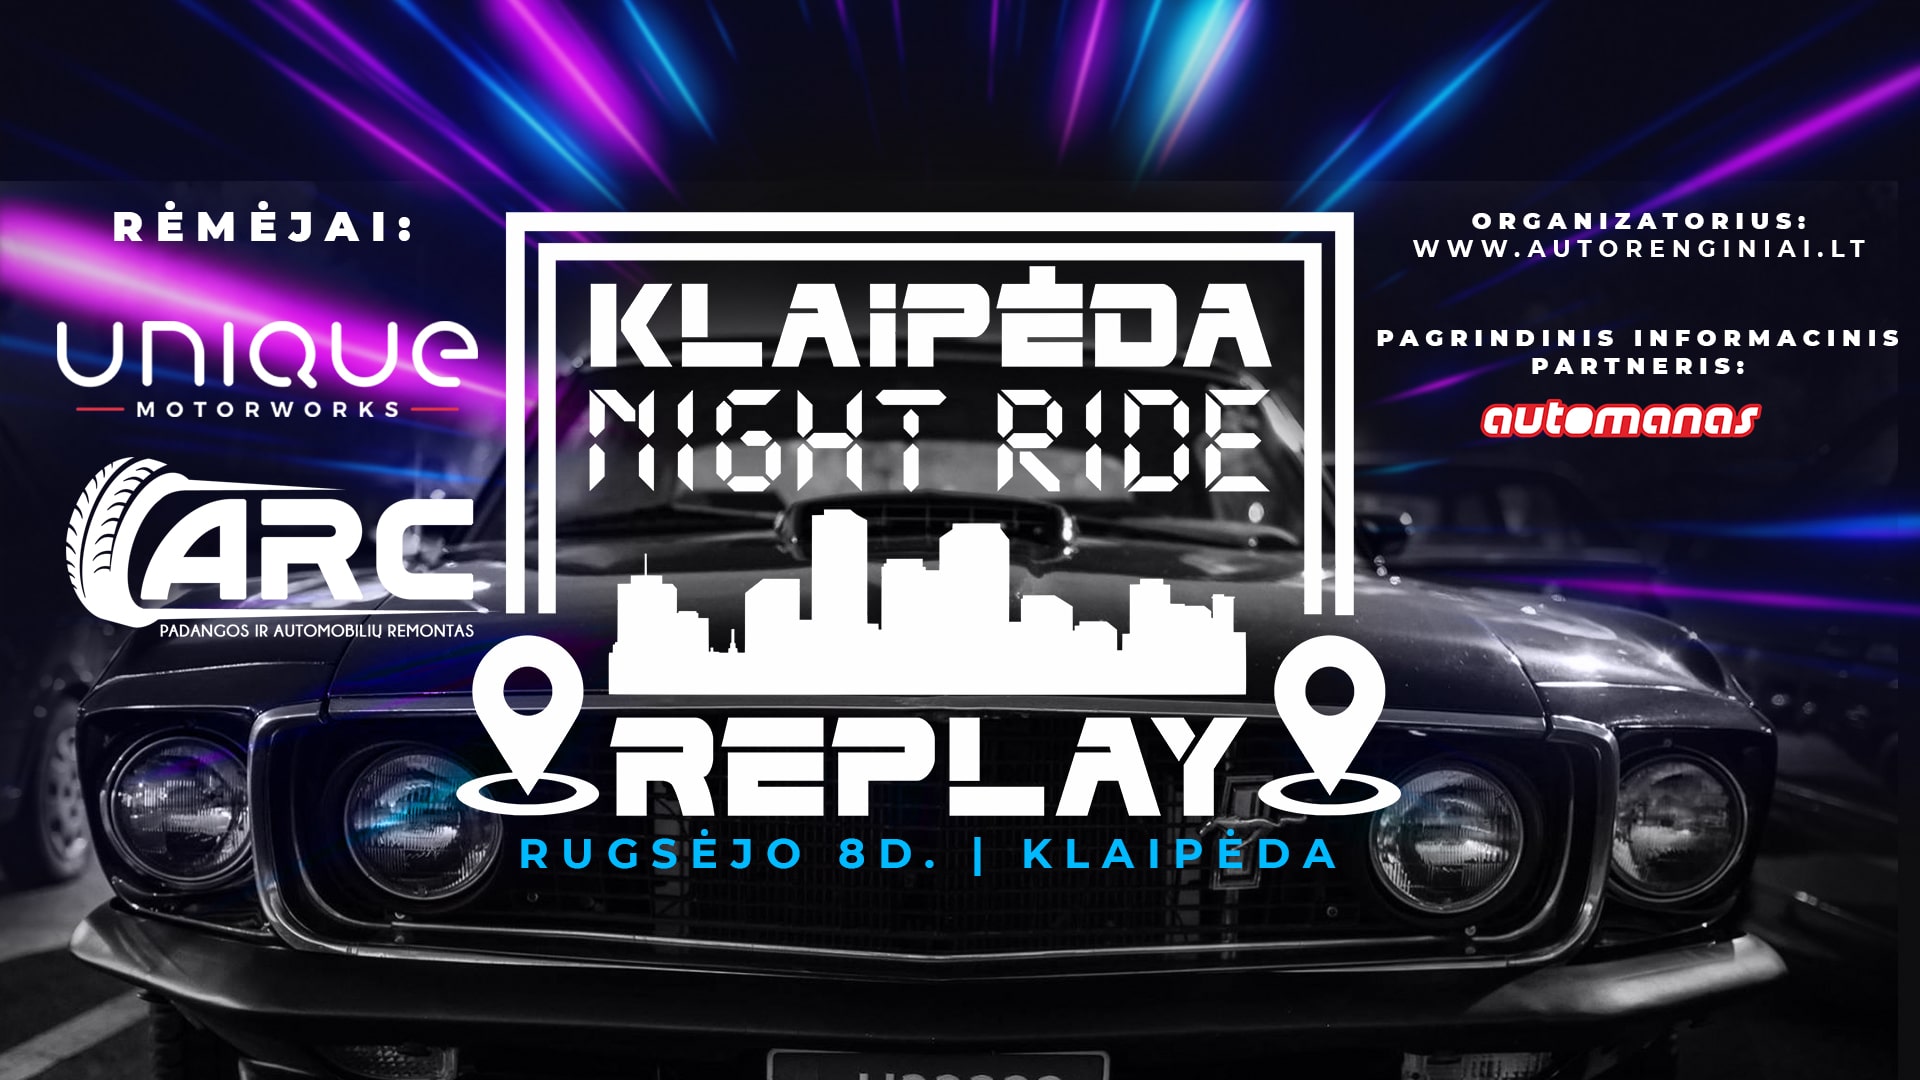 Klaipėda Night Ride III - Replay 2017